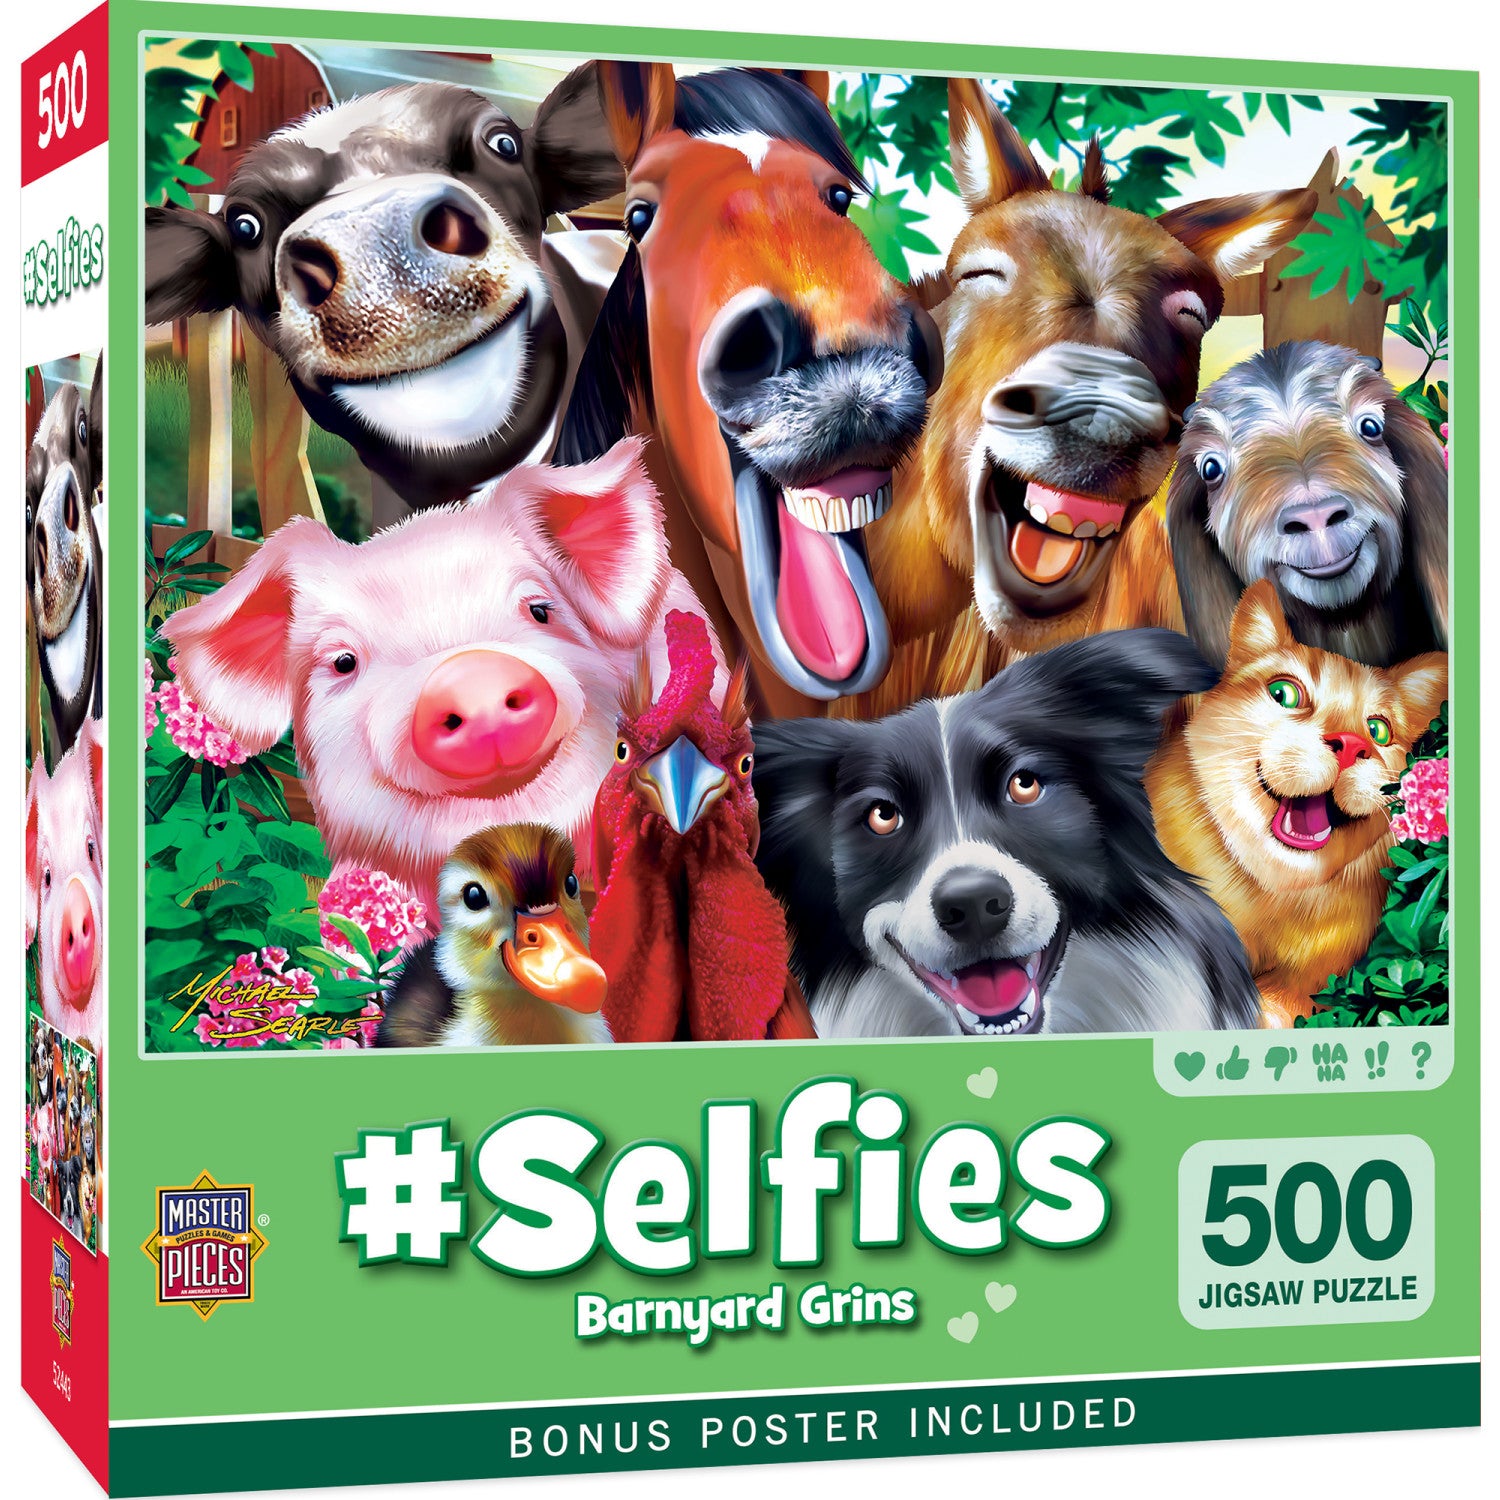 Selfies - Barnyard Grins 500 Piece Jigsaw Puzzle